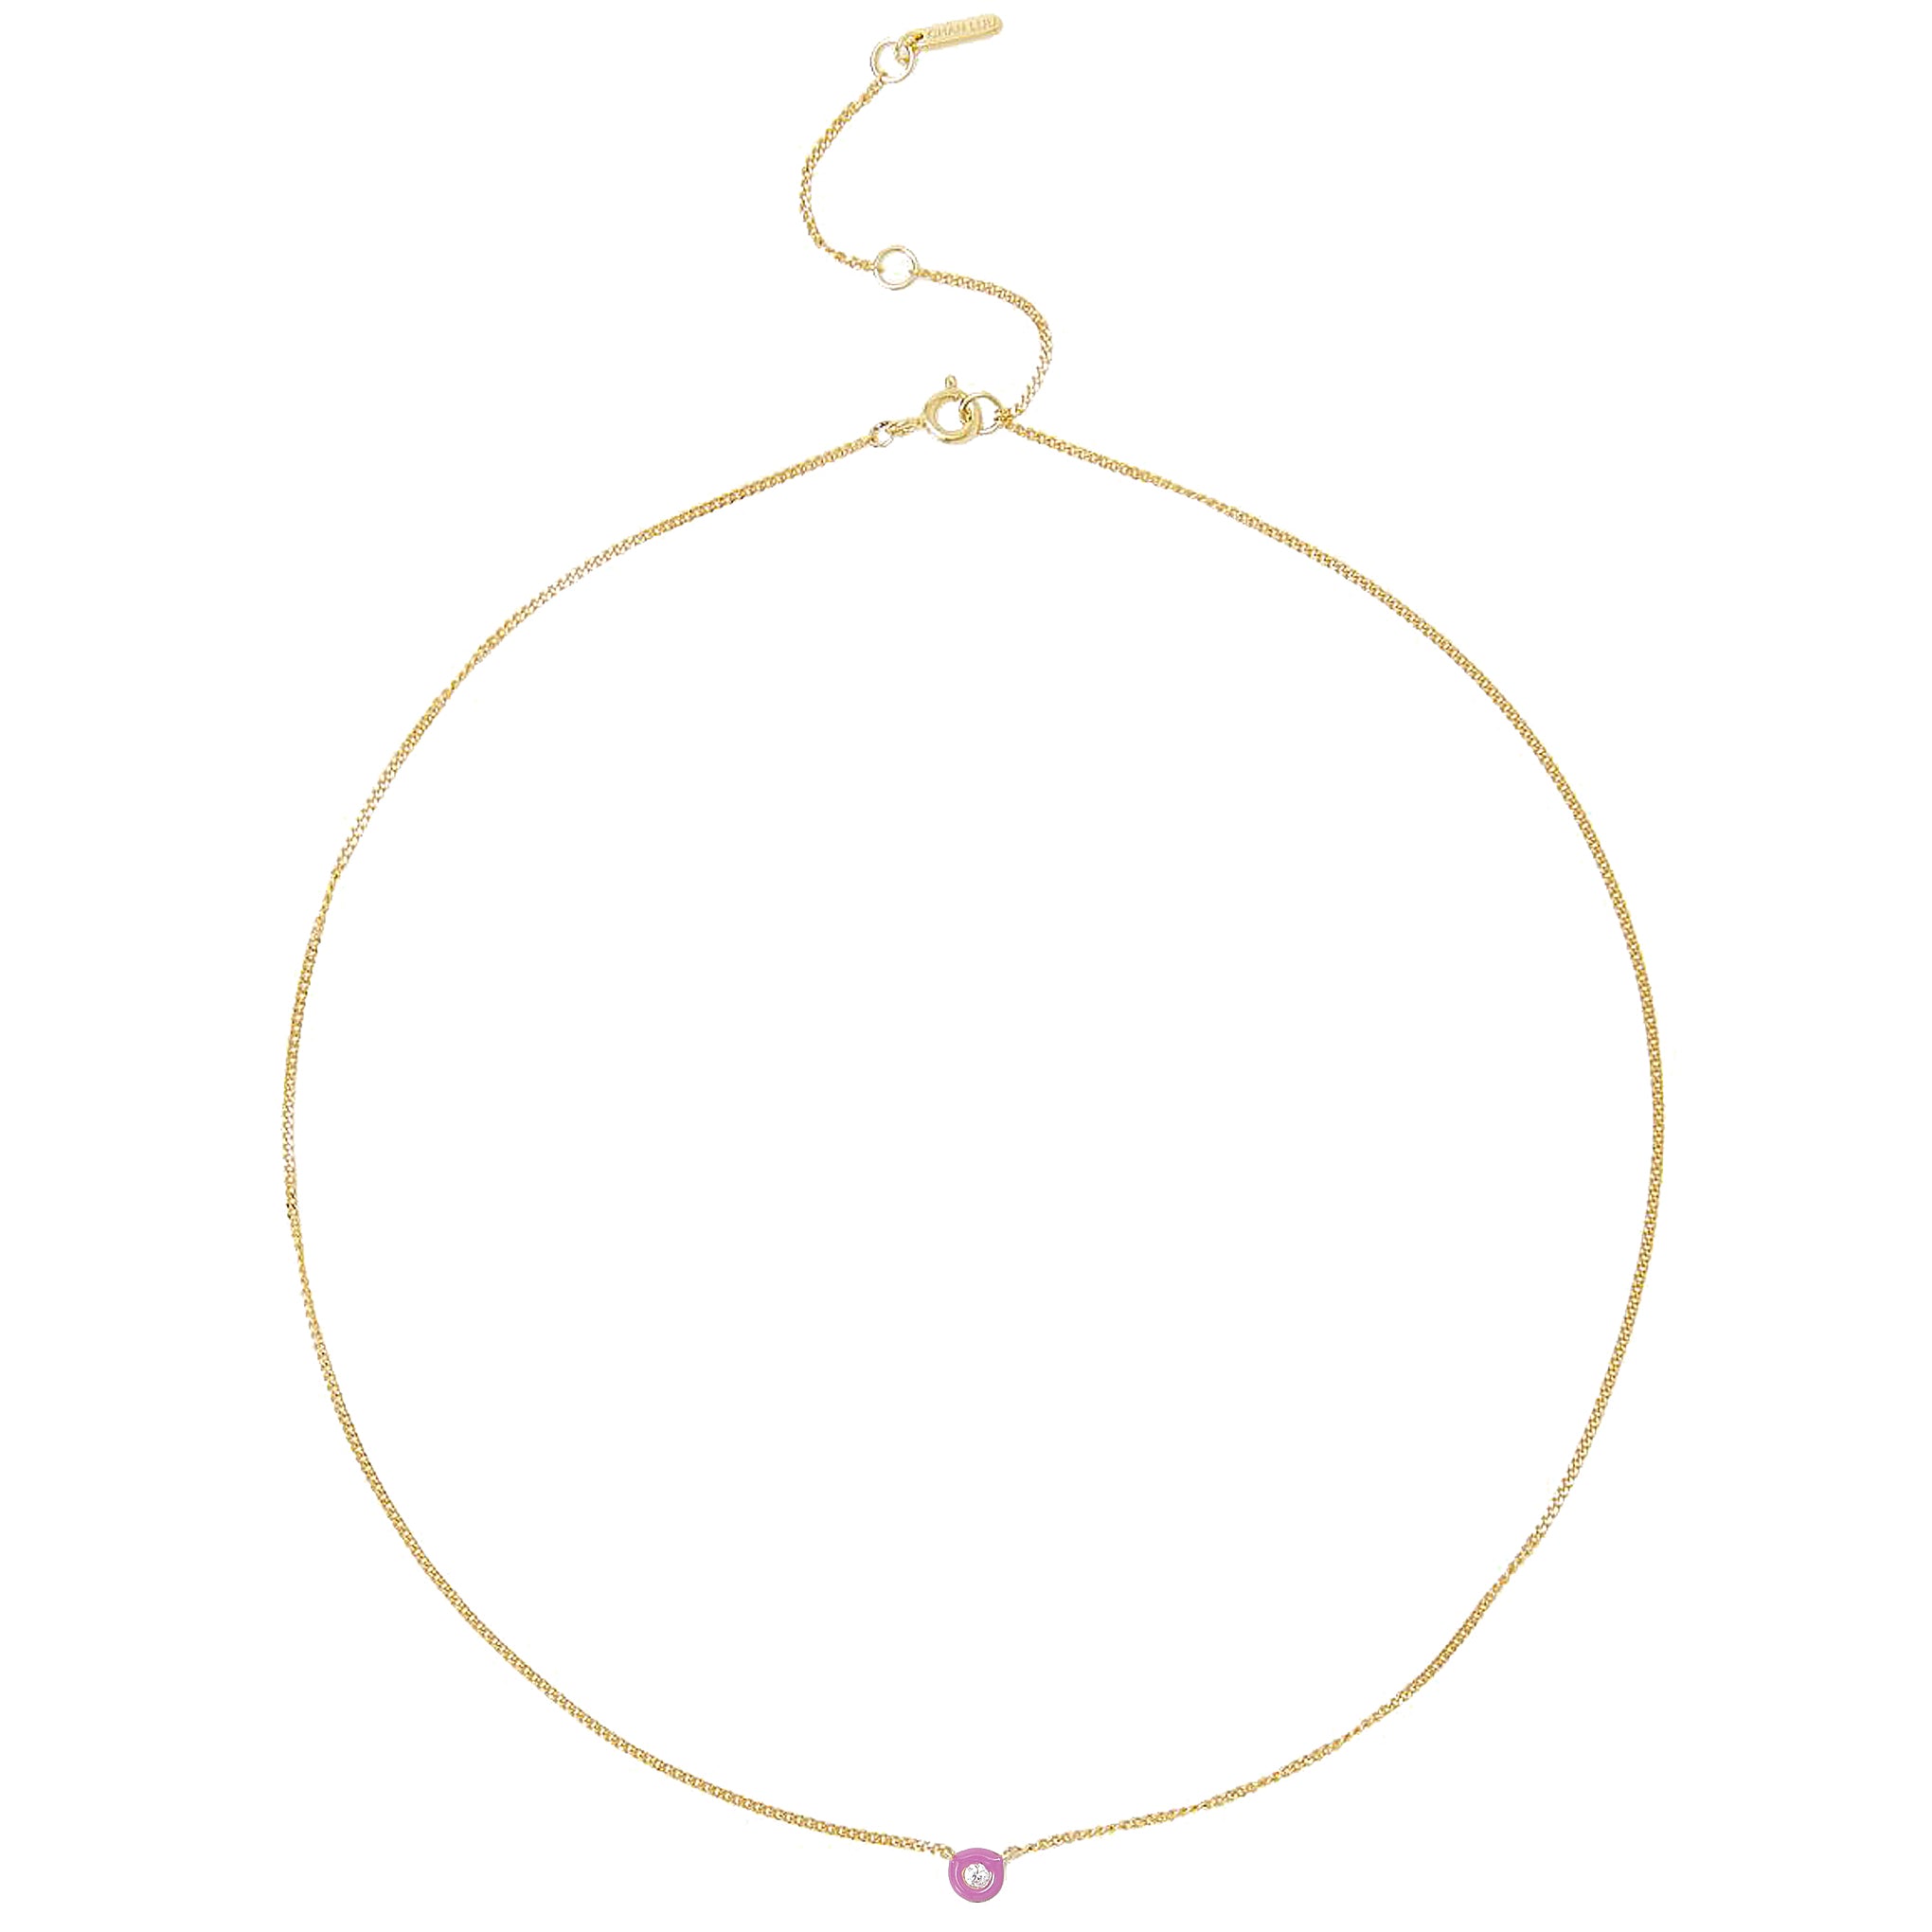 Chan Luu Bezel Set Diamond Pendant Necklace in Violet Enamel and Gold Vermeil